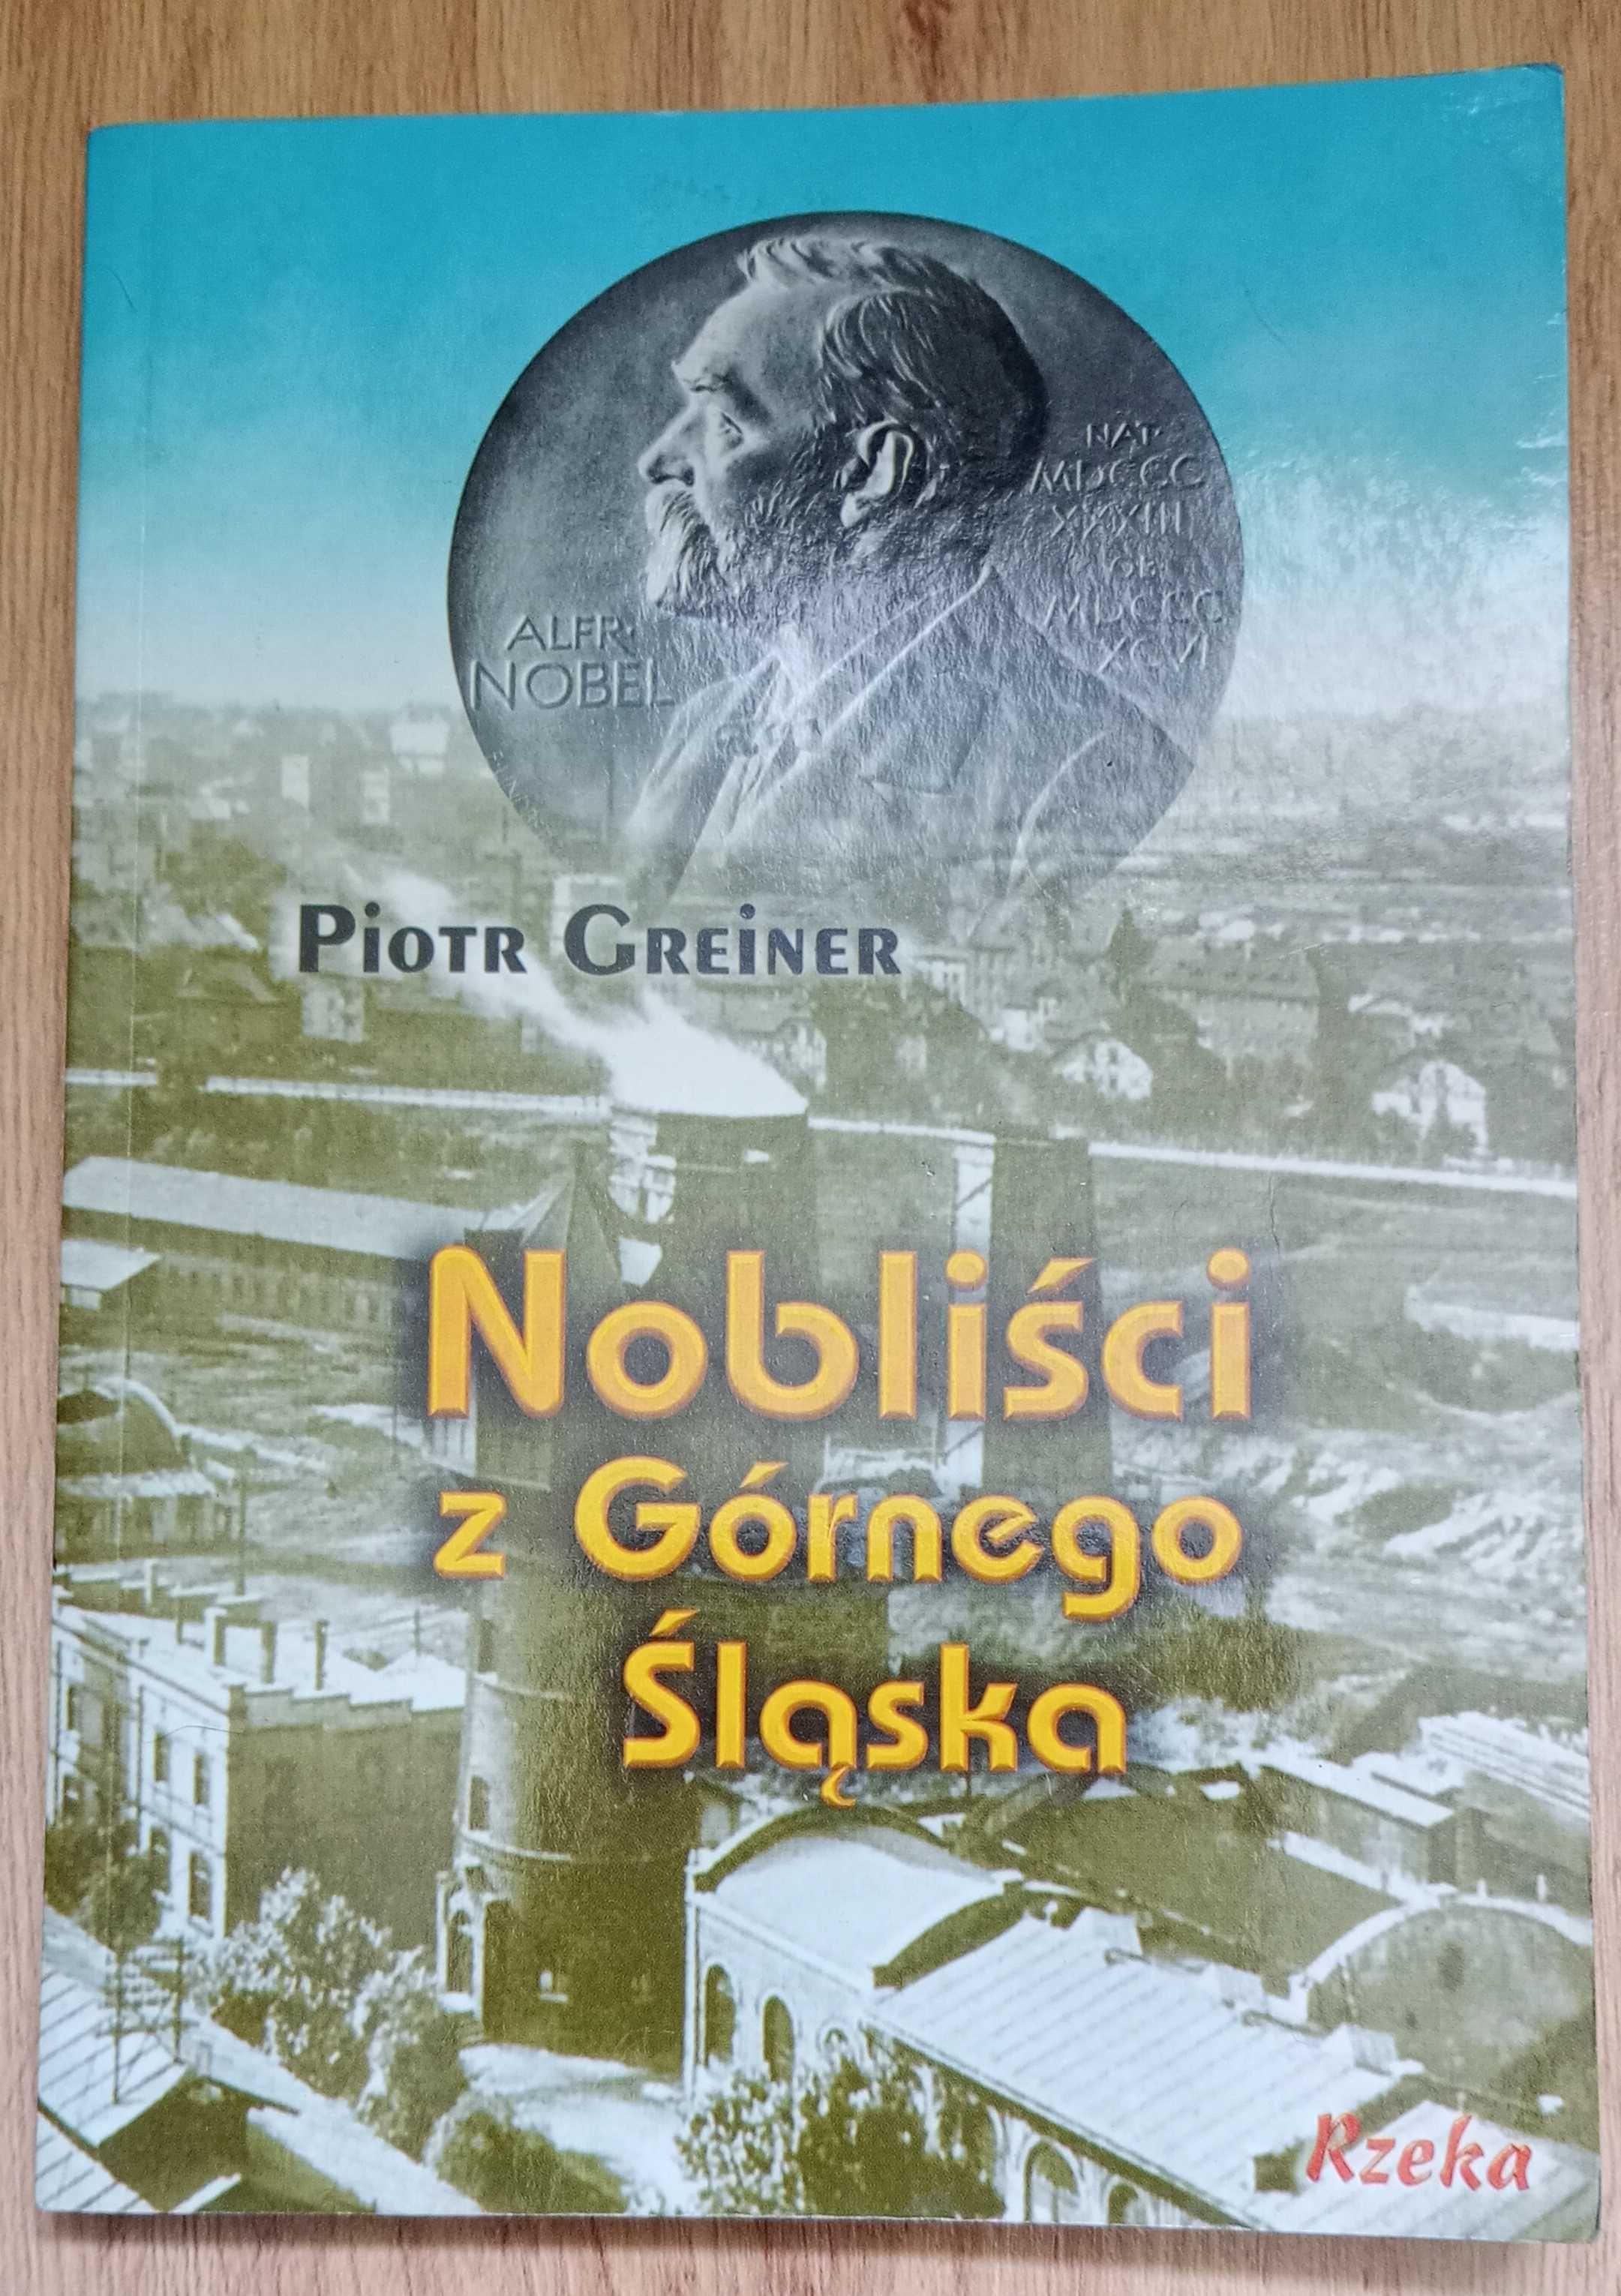 Nobliści z Górnego Śląska - Piotr Greiner